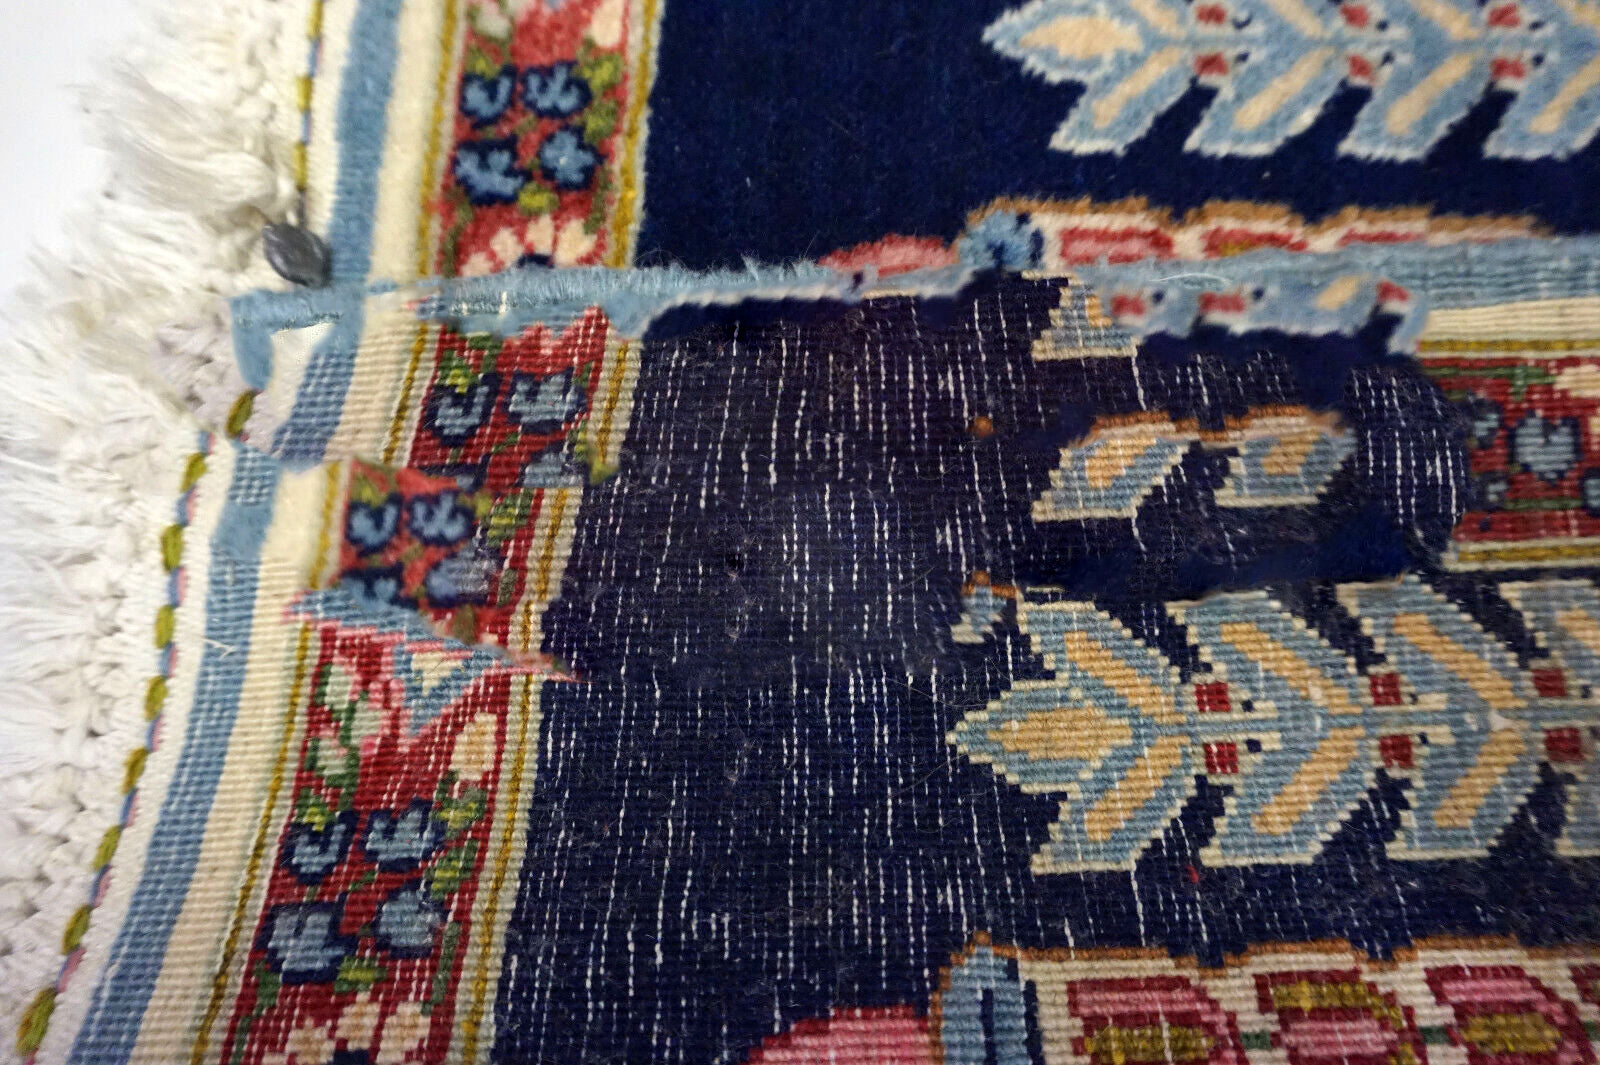 Reverse View of Antique Persian Kerman Mat